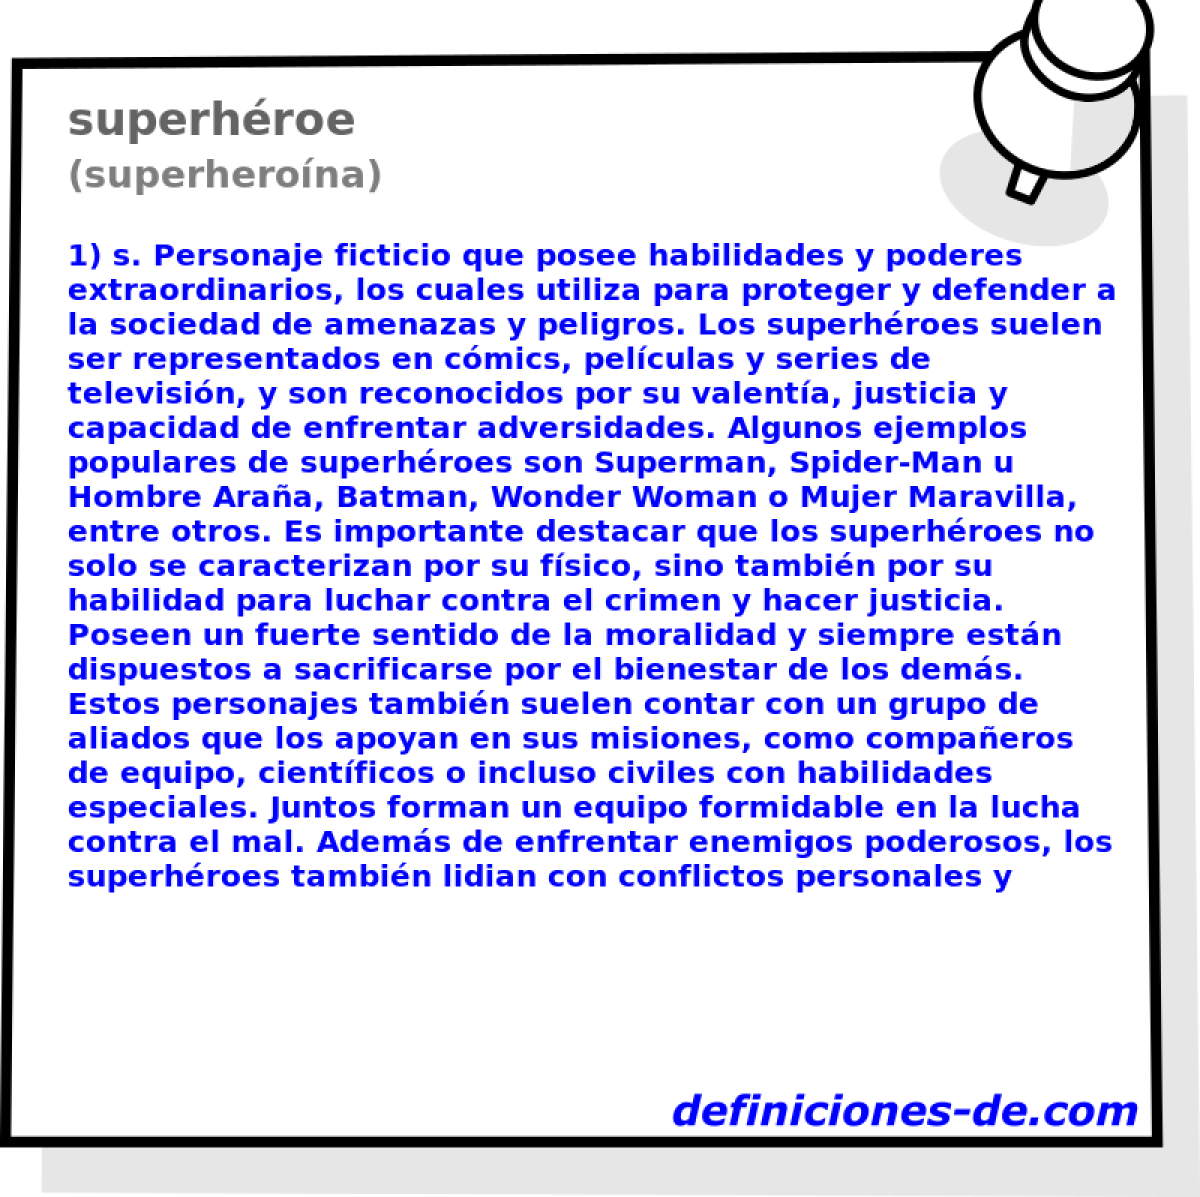 superhroe (superherona)